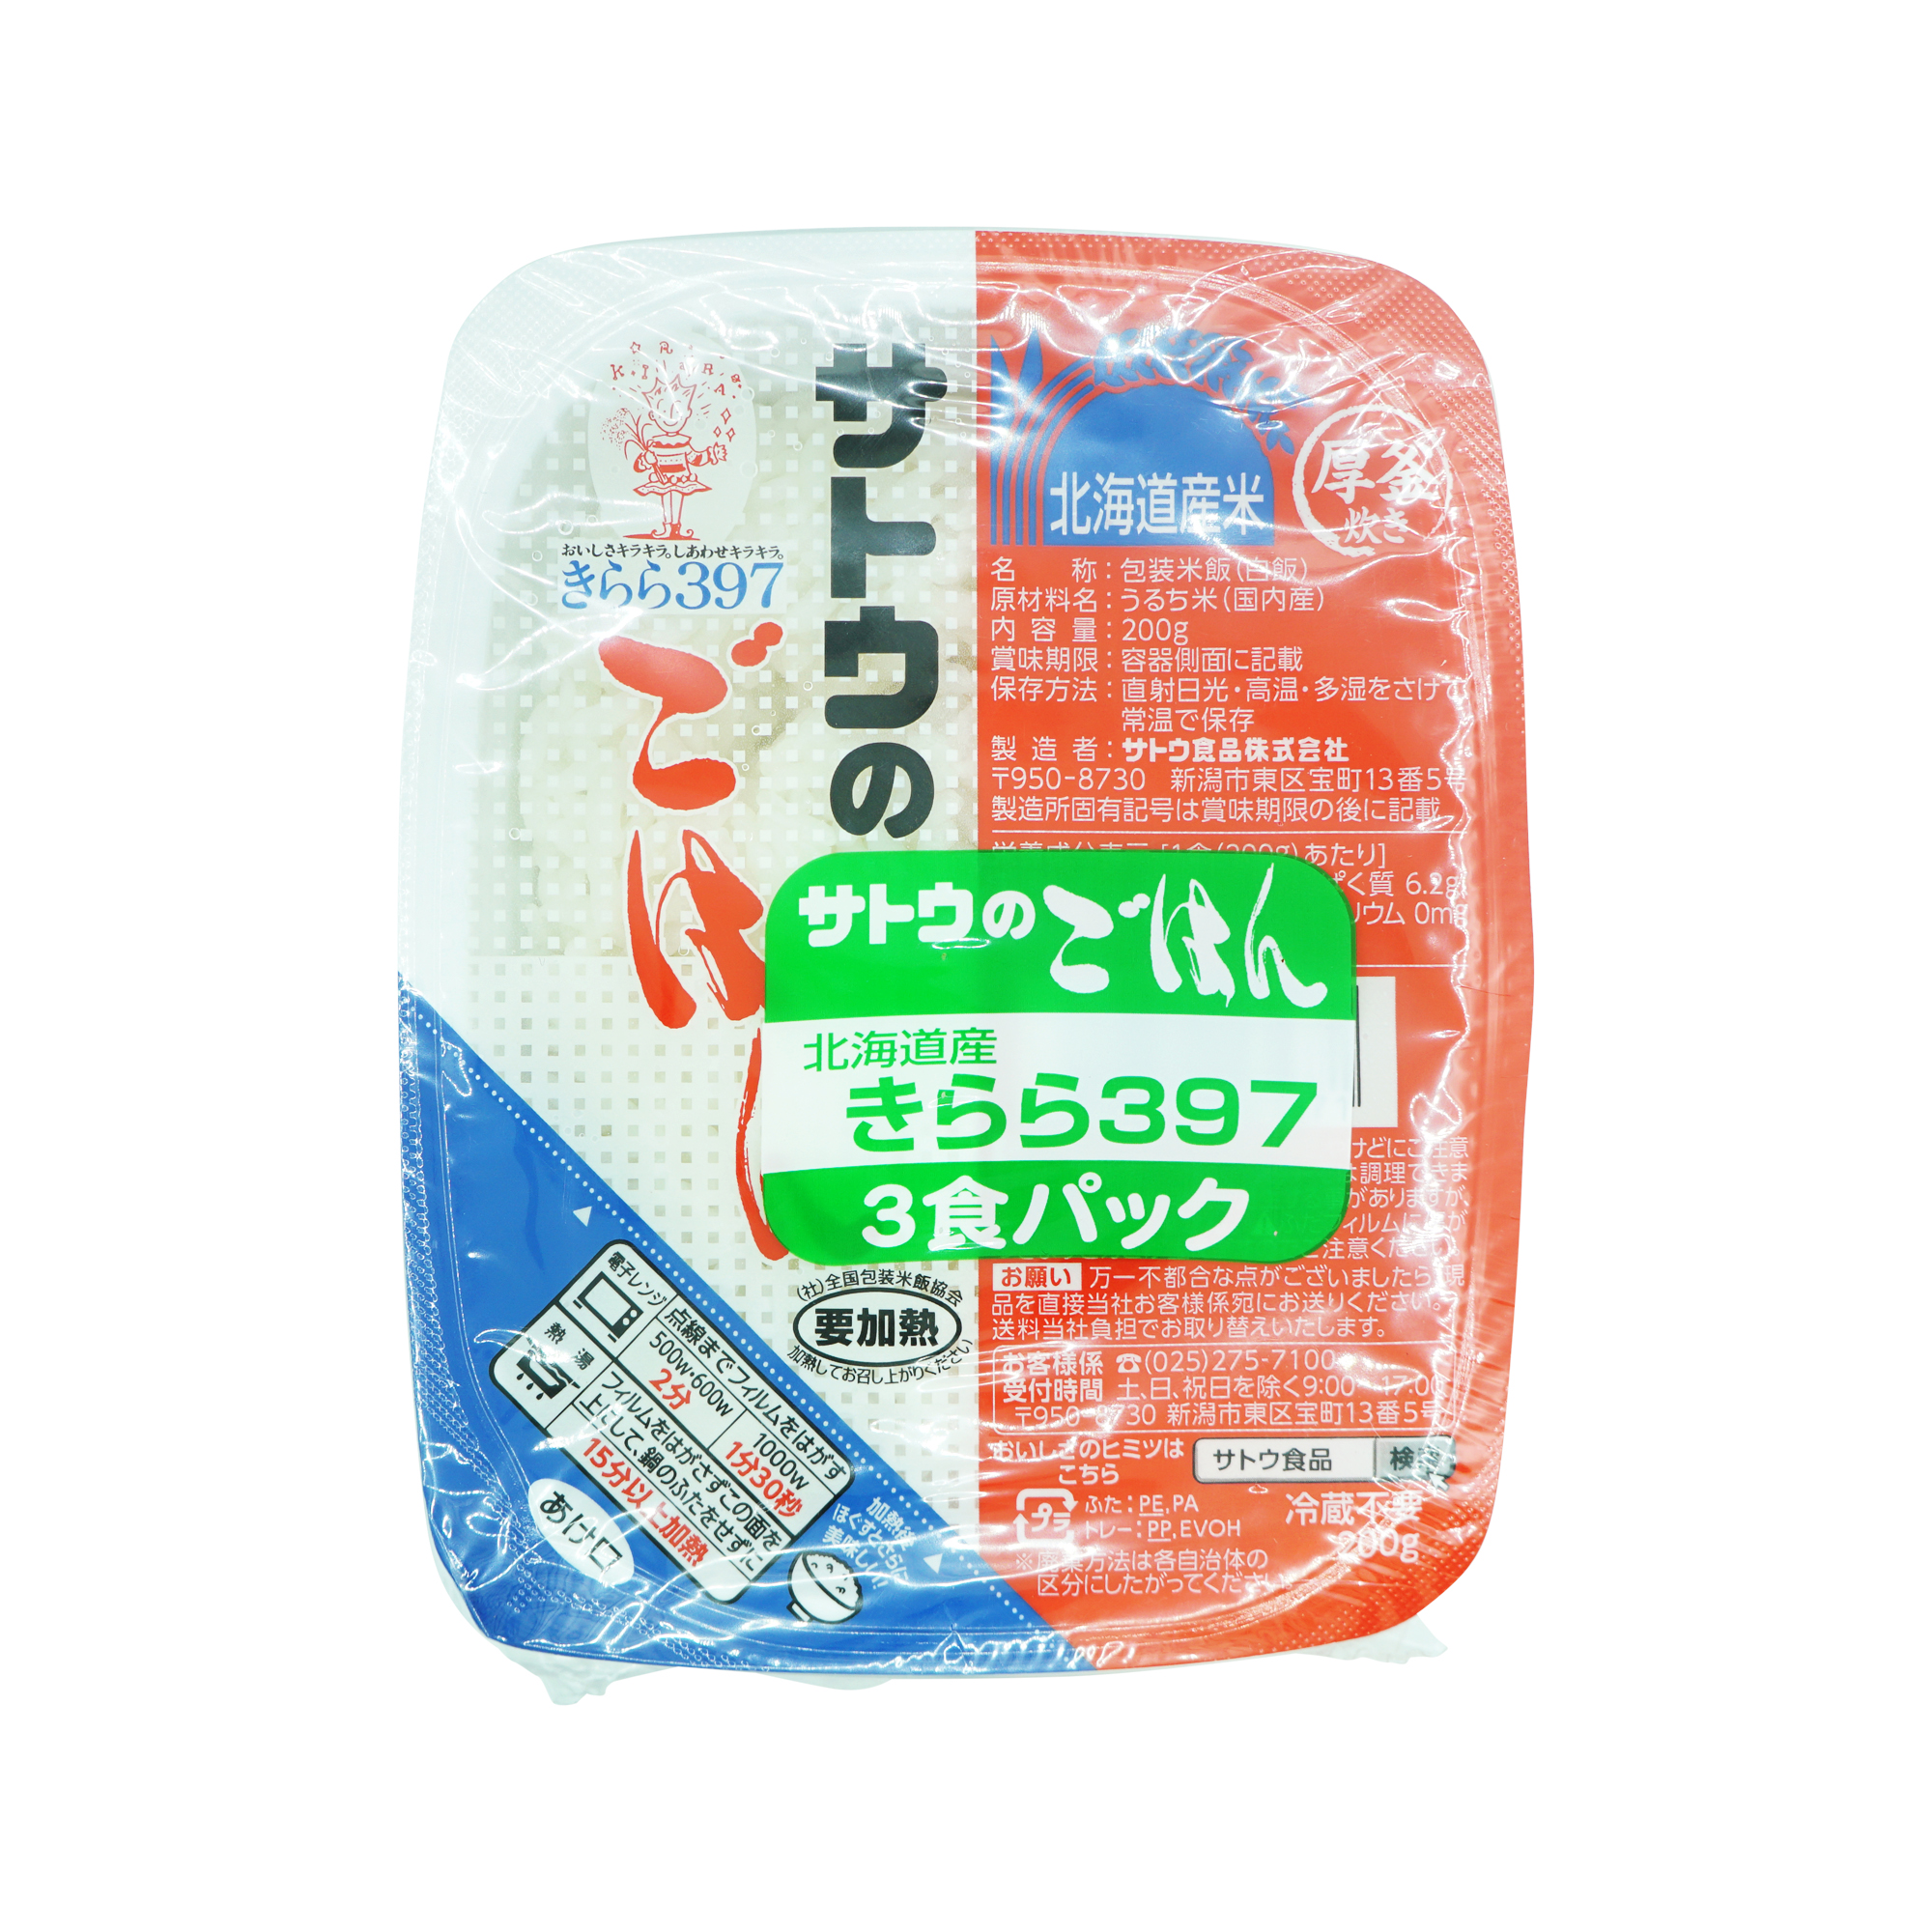 Sato Instant Cooked Rice Kirara 397 Set 3 packs200g